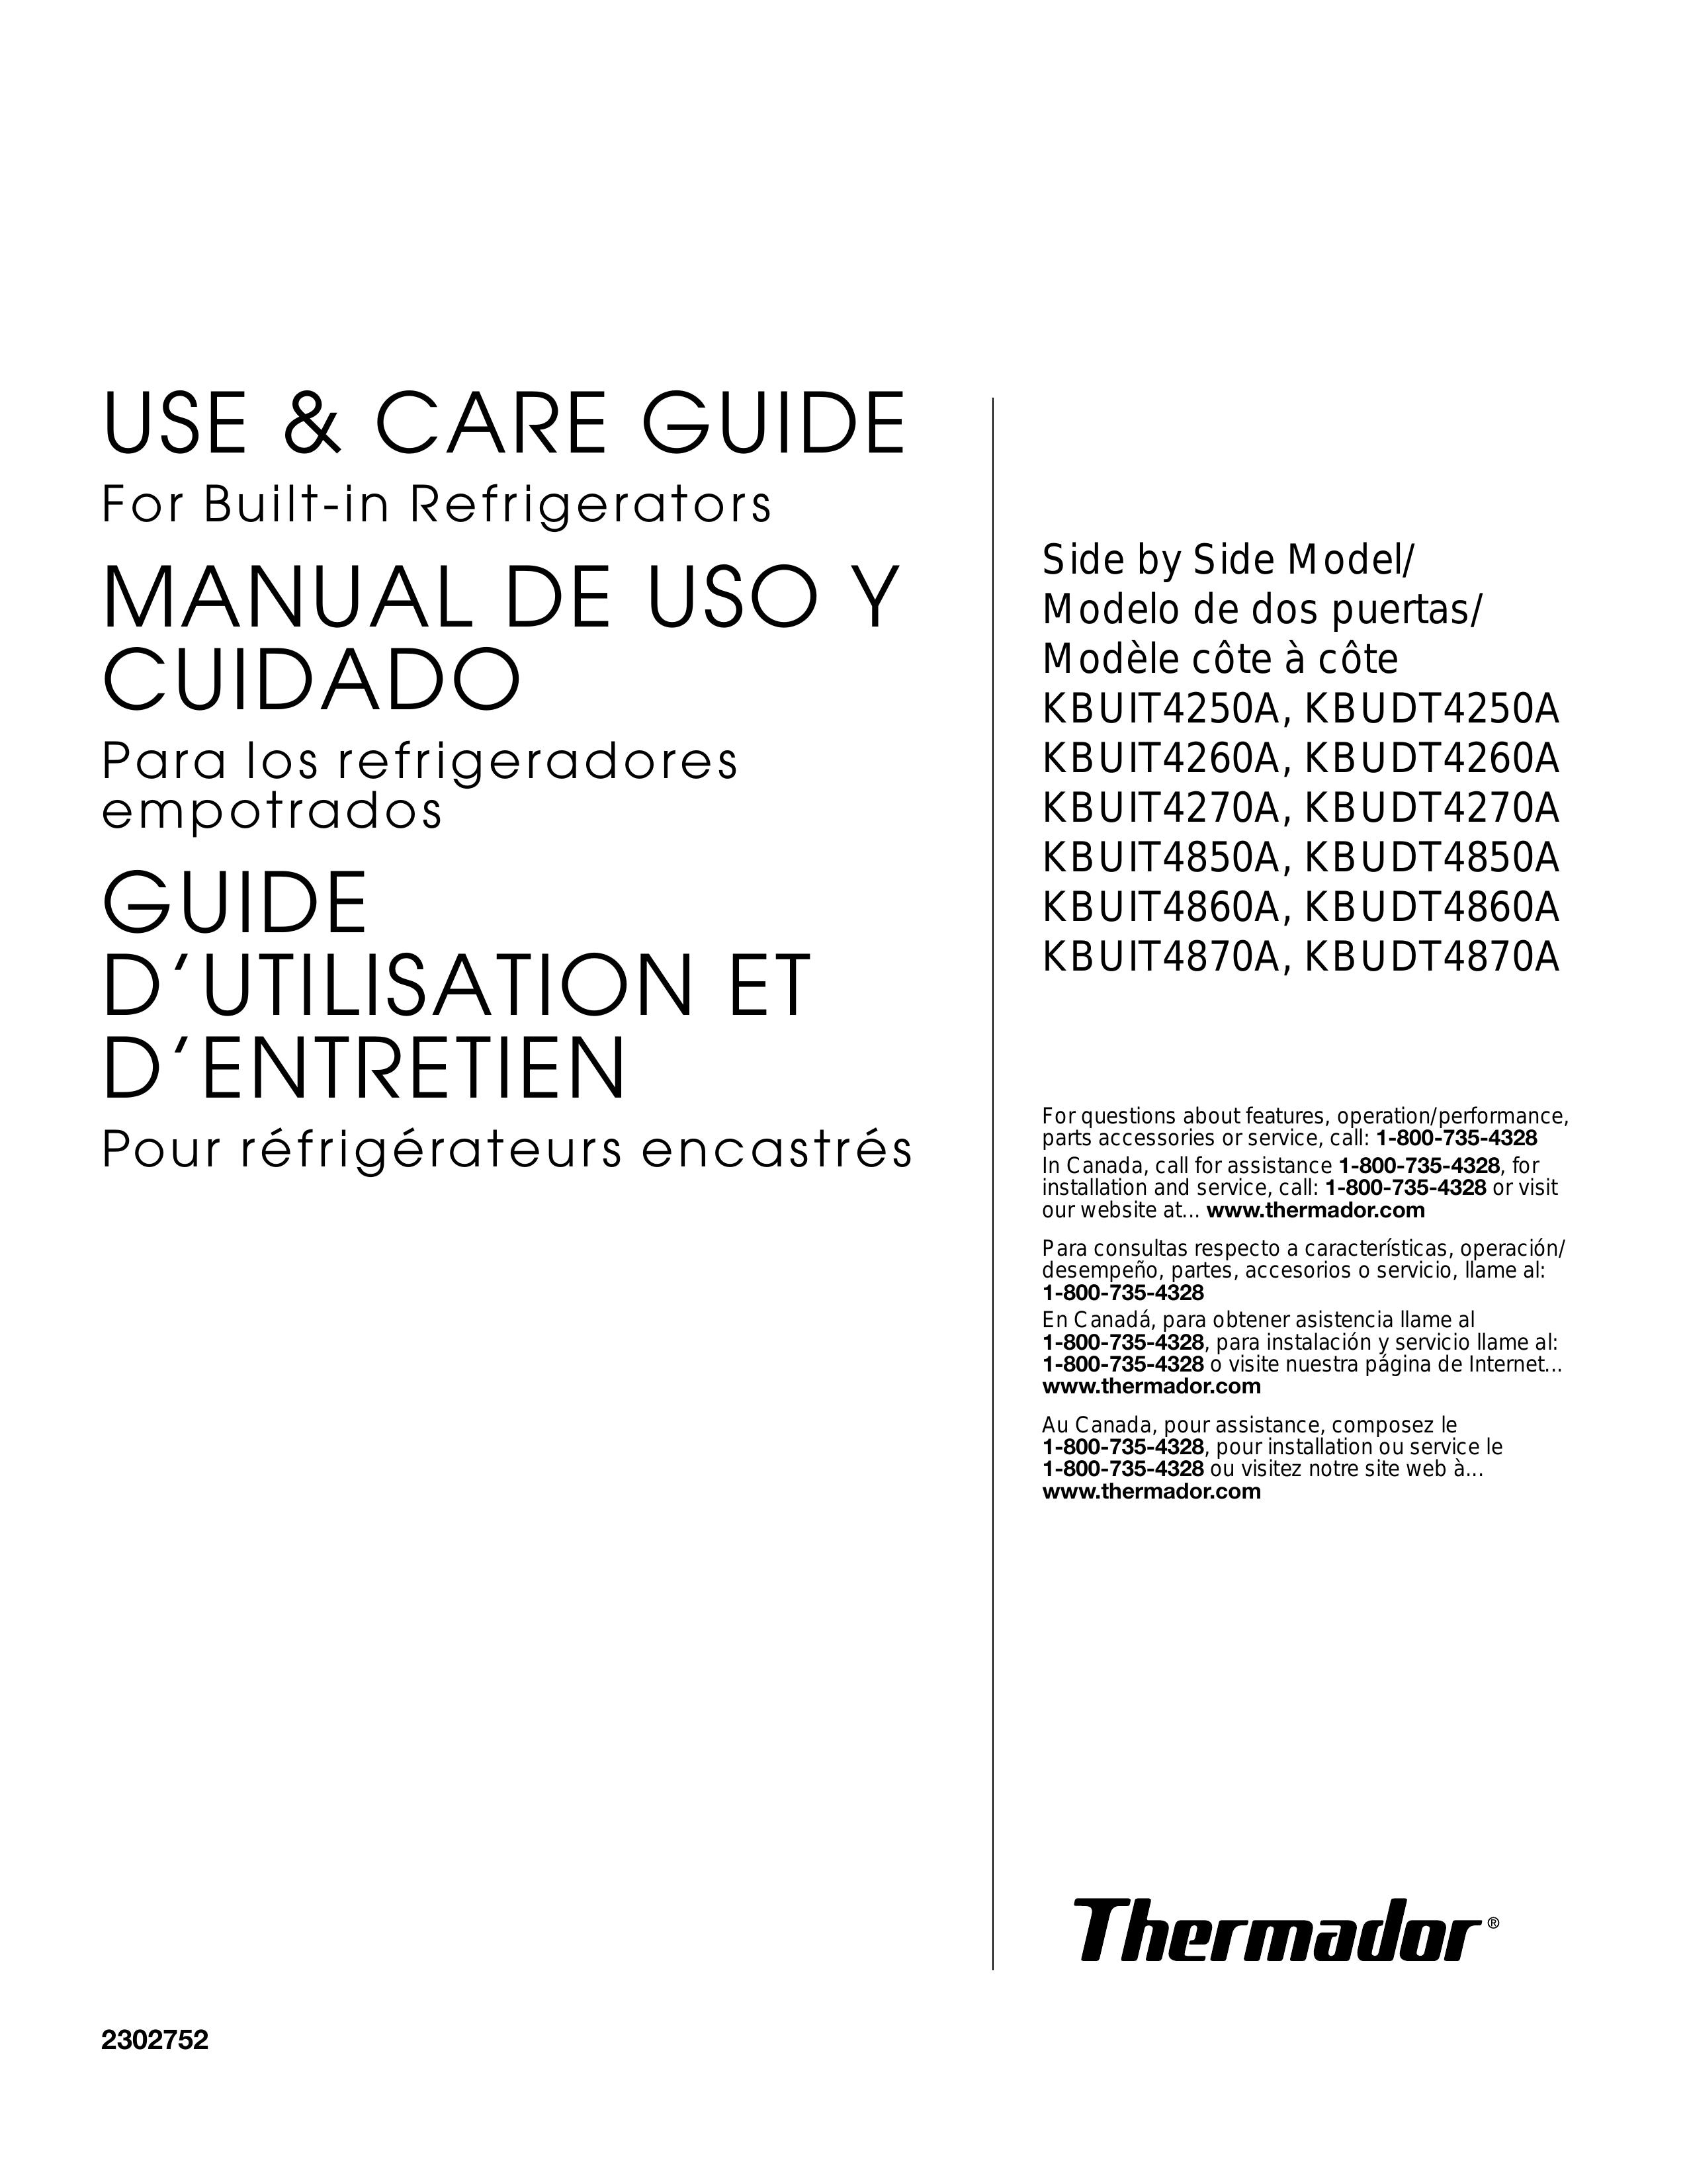 Thermador KBUIT4260A Refrigerator User Manual